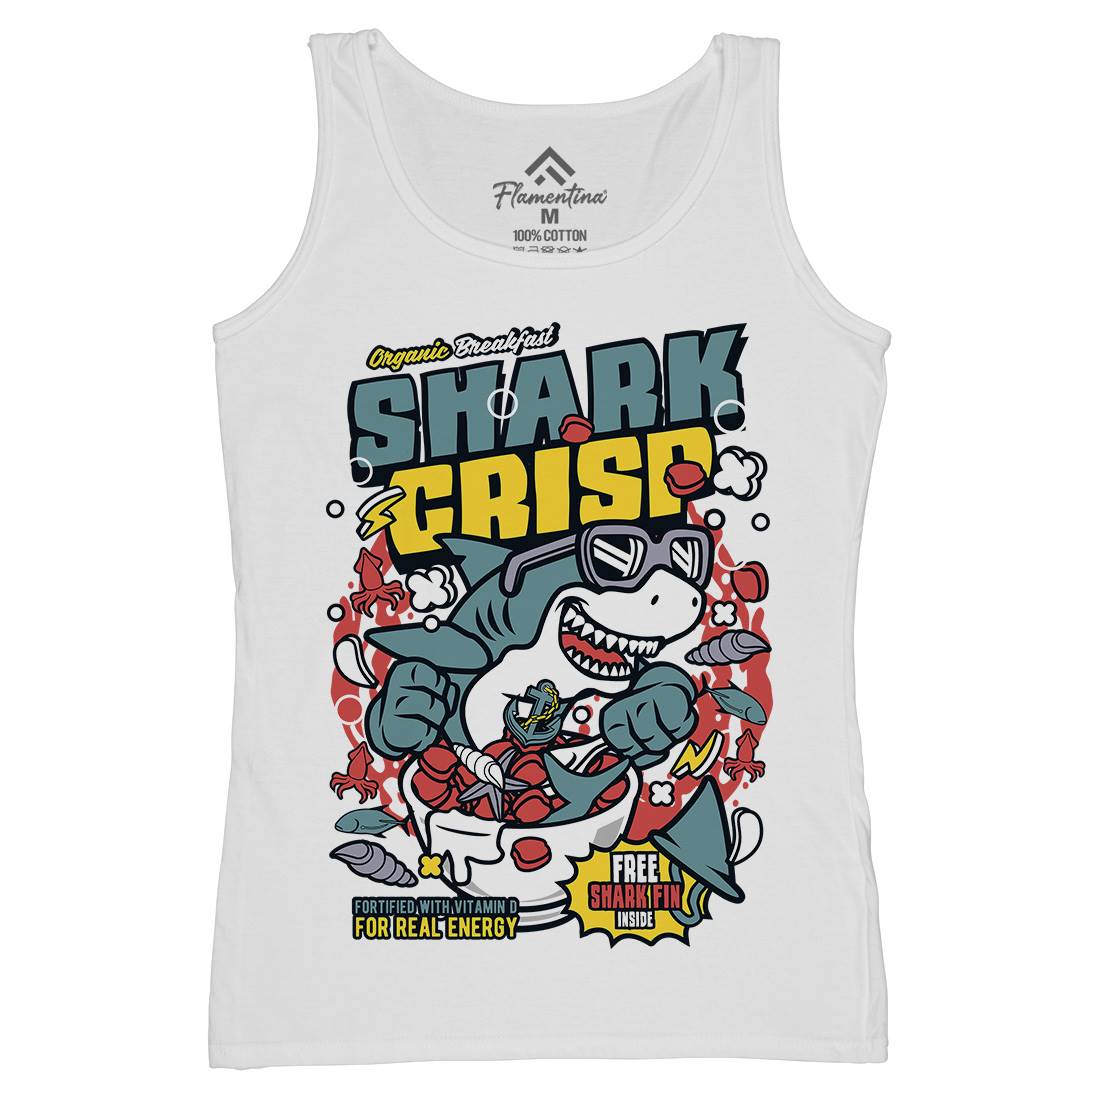 Shark Crisp Womens Organic Tank Top Vest Food C643